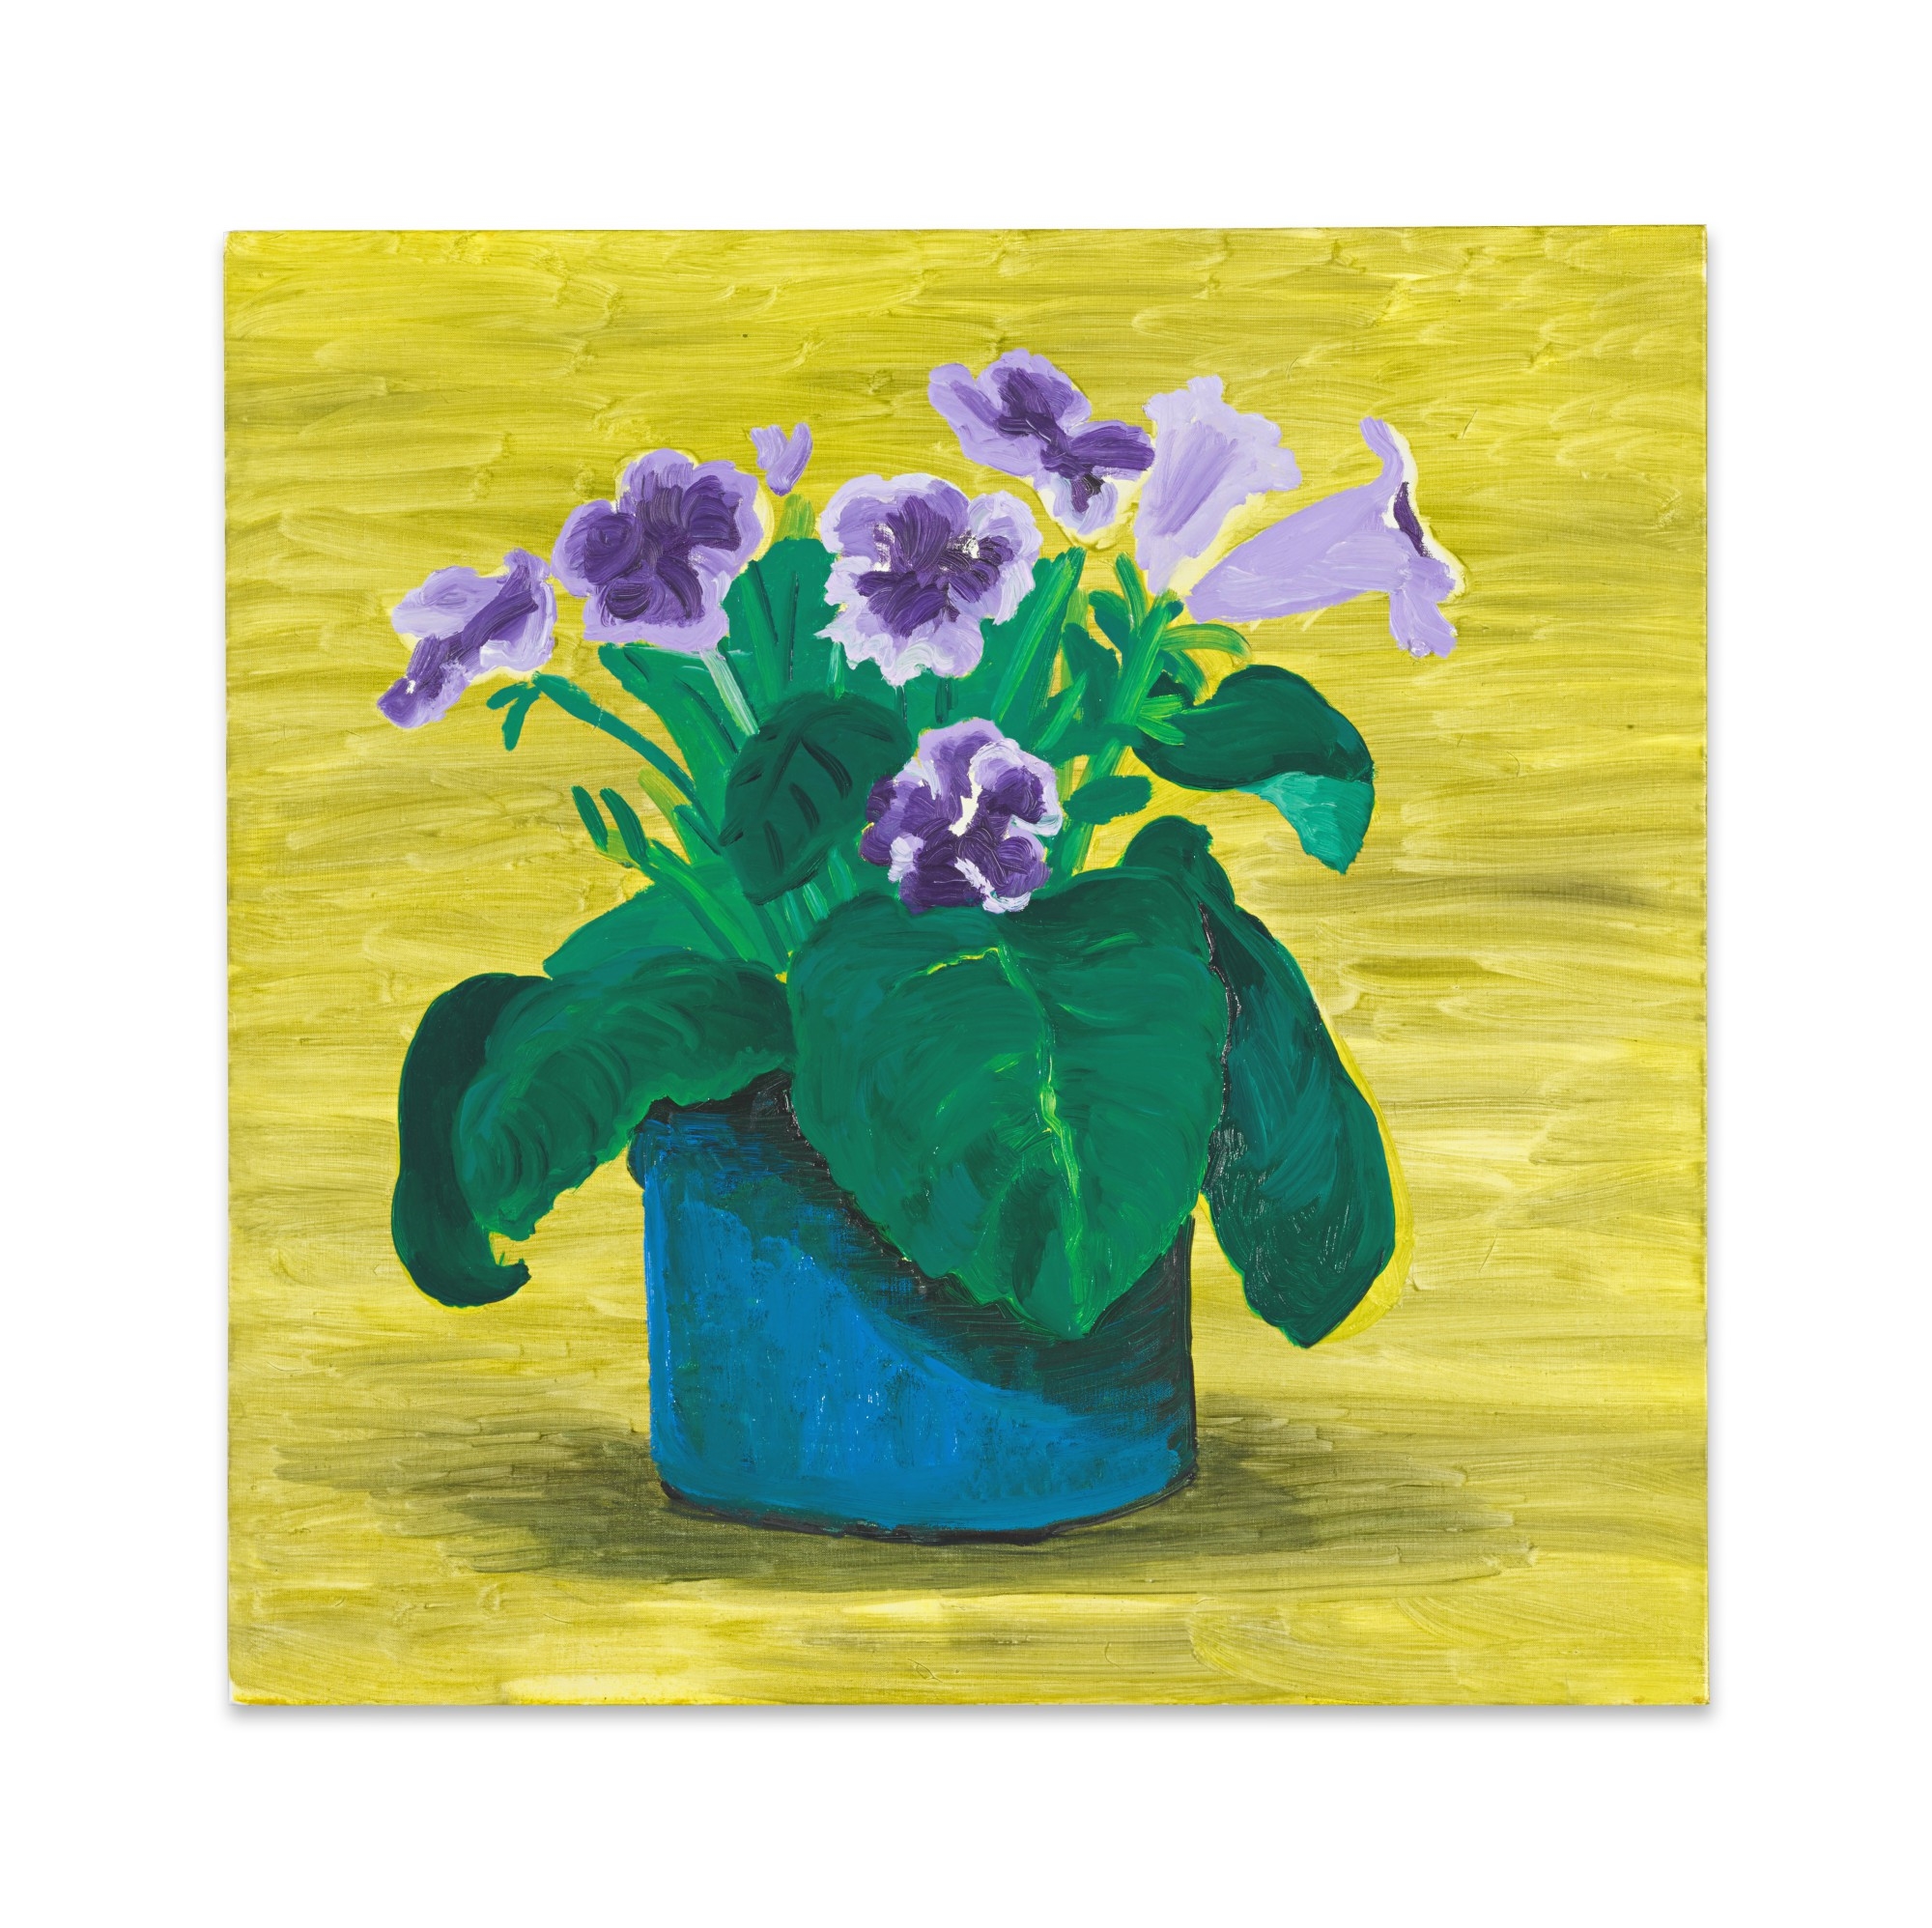 Blue Pot of Purple Flowers by David Hockney, dated 1989